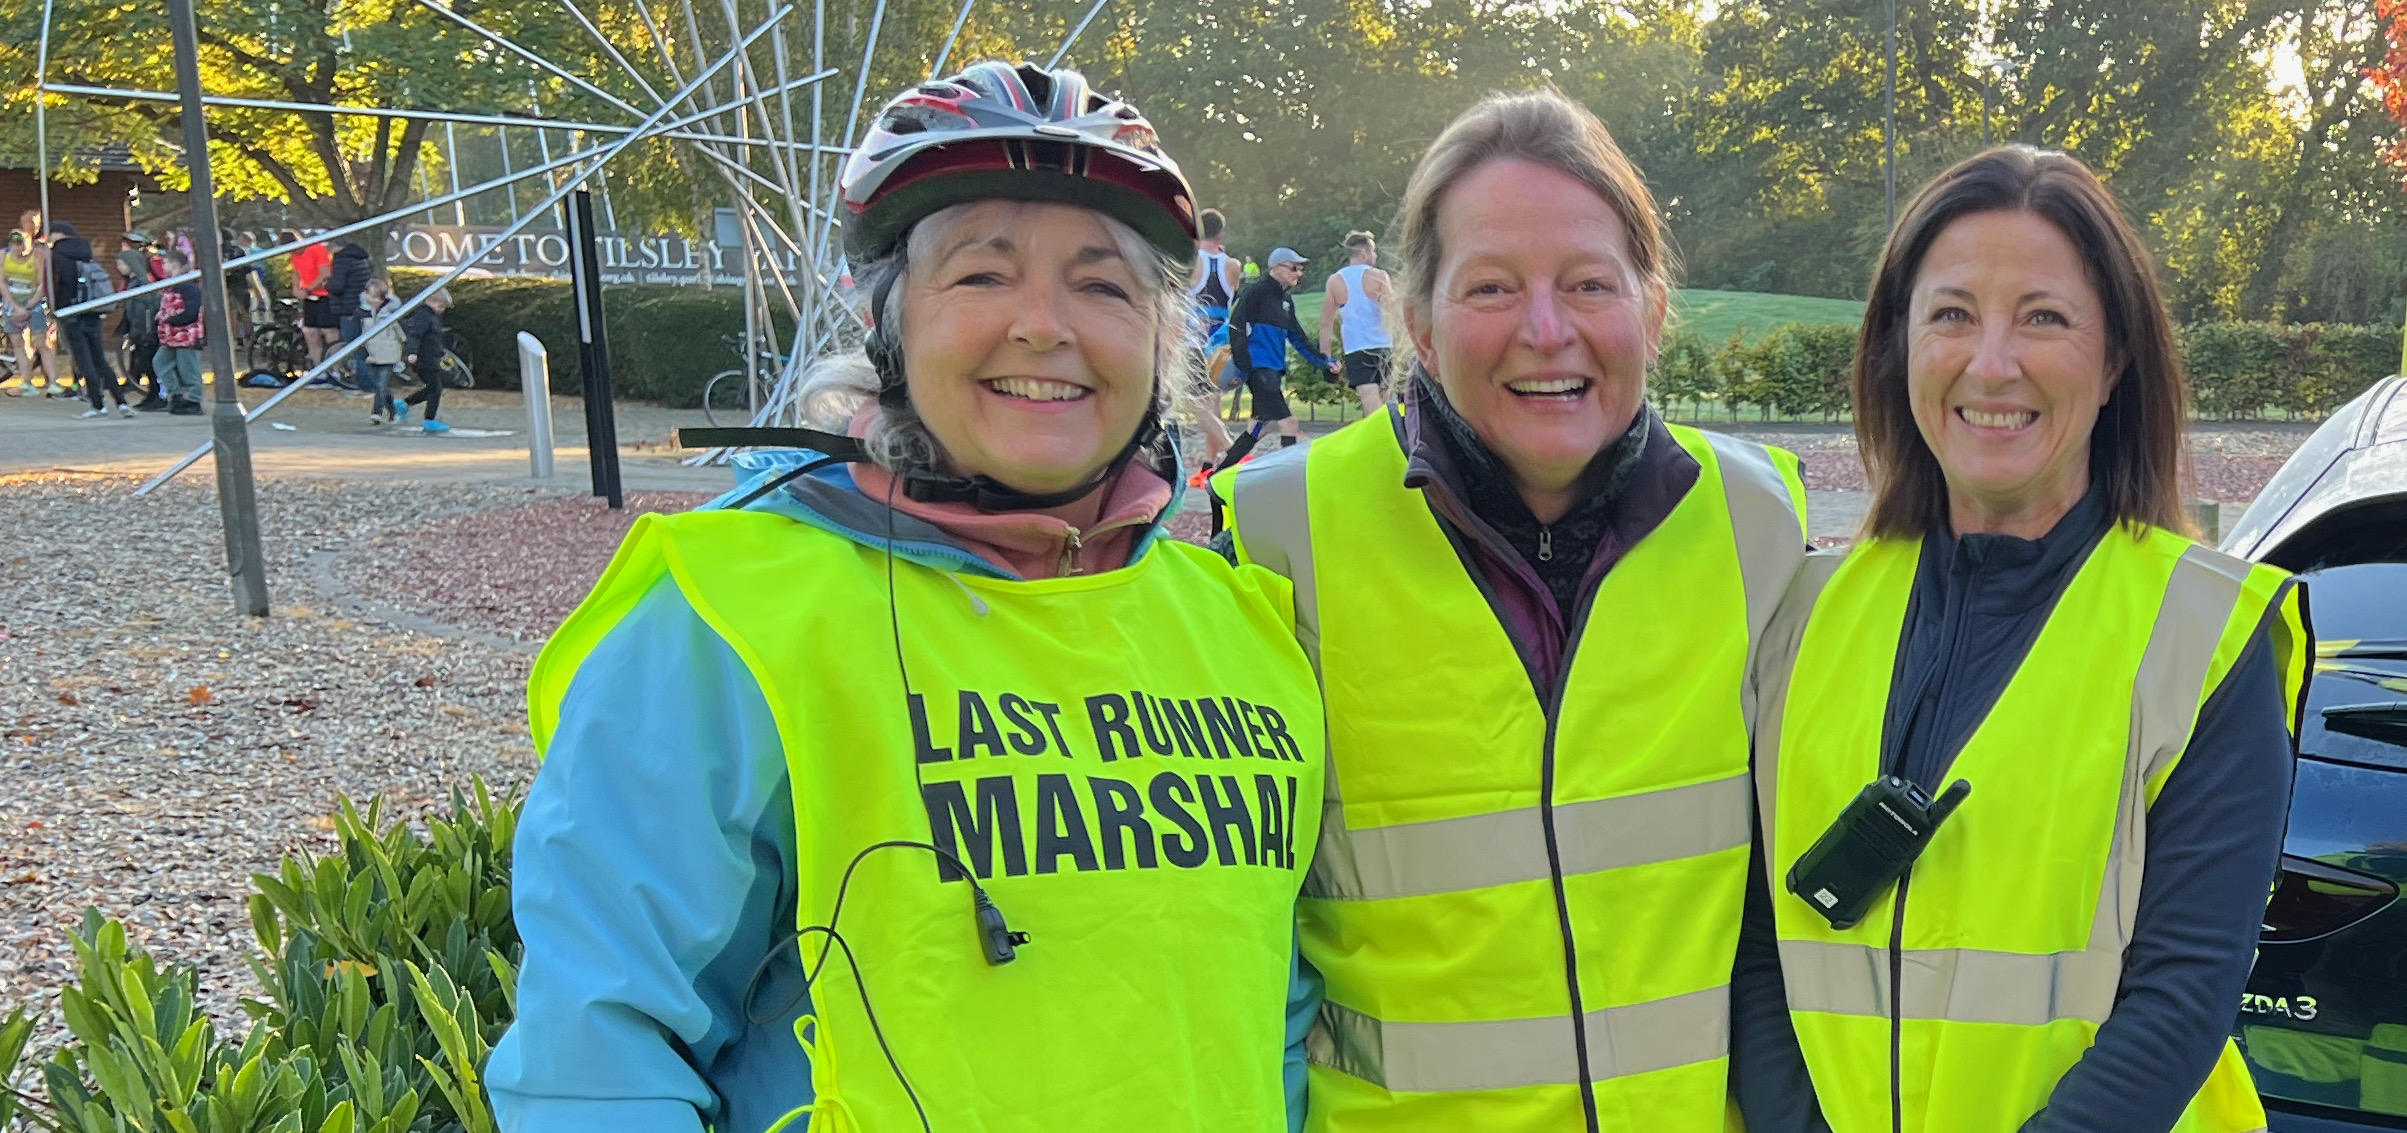 The Abingdon Marathon - Volunteers